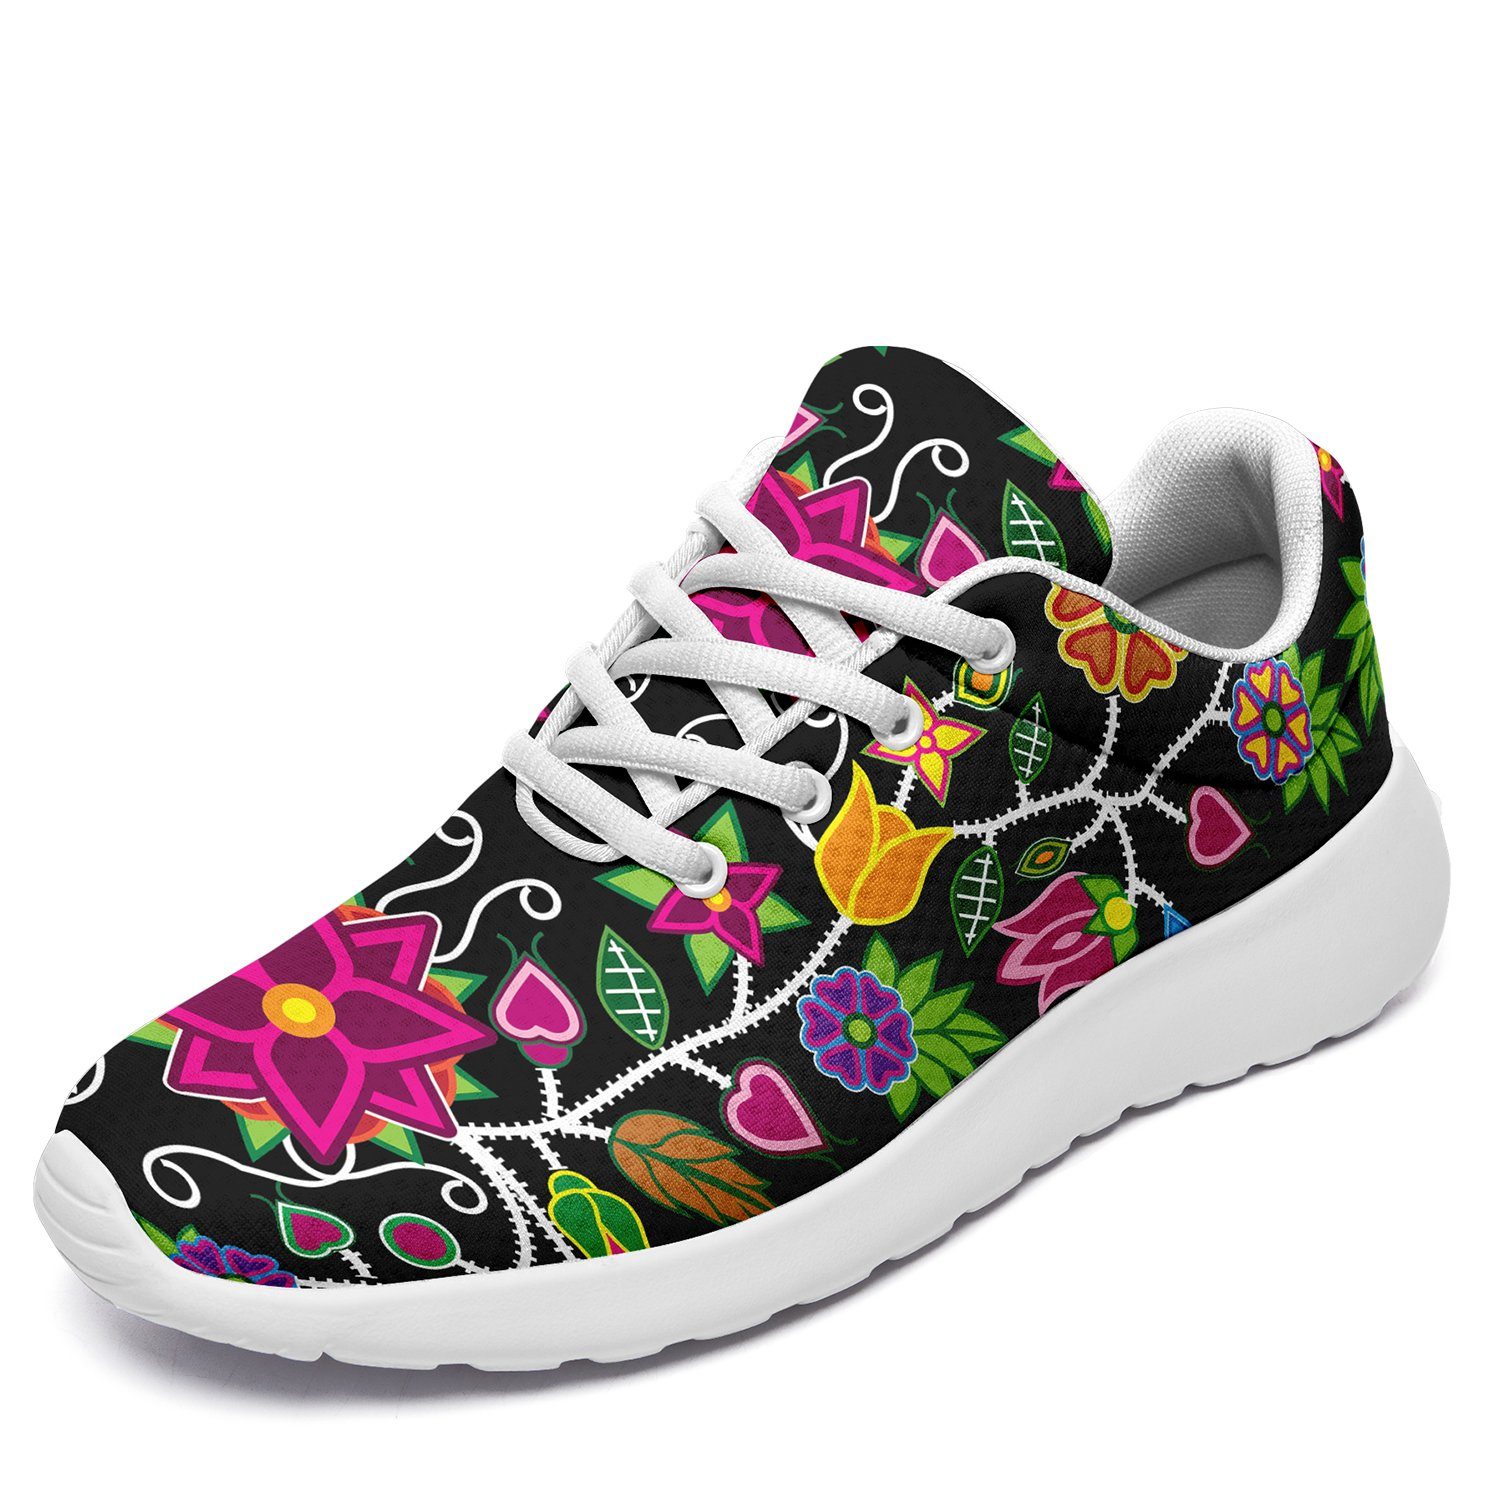 Floral Beadwork Ikkaayi Sport Sneakers 49 Dzine US Women 4.5 / US Youth 3.5 / EUR 35 White Sole 